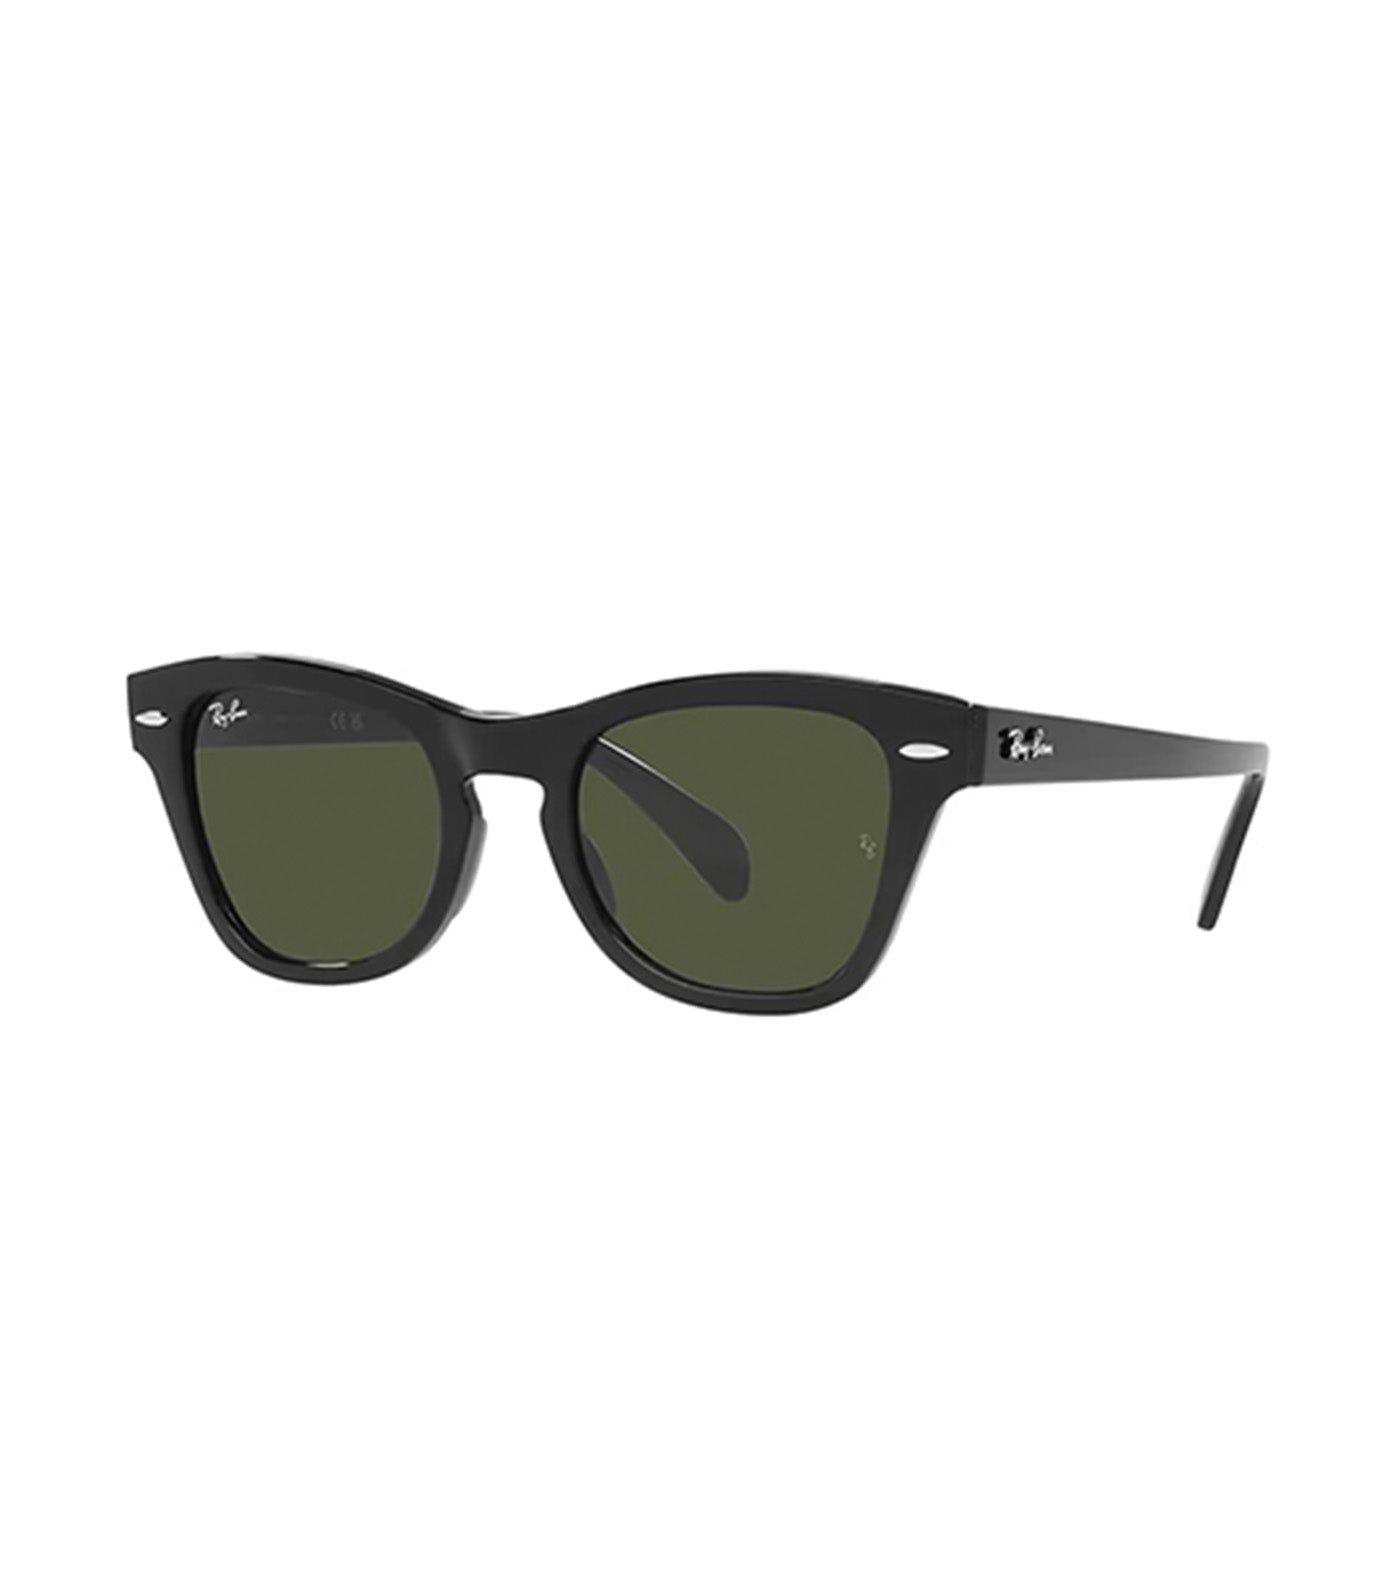 RB0707S Sunglasses Black